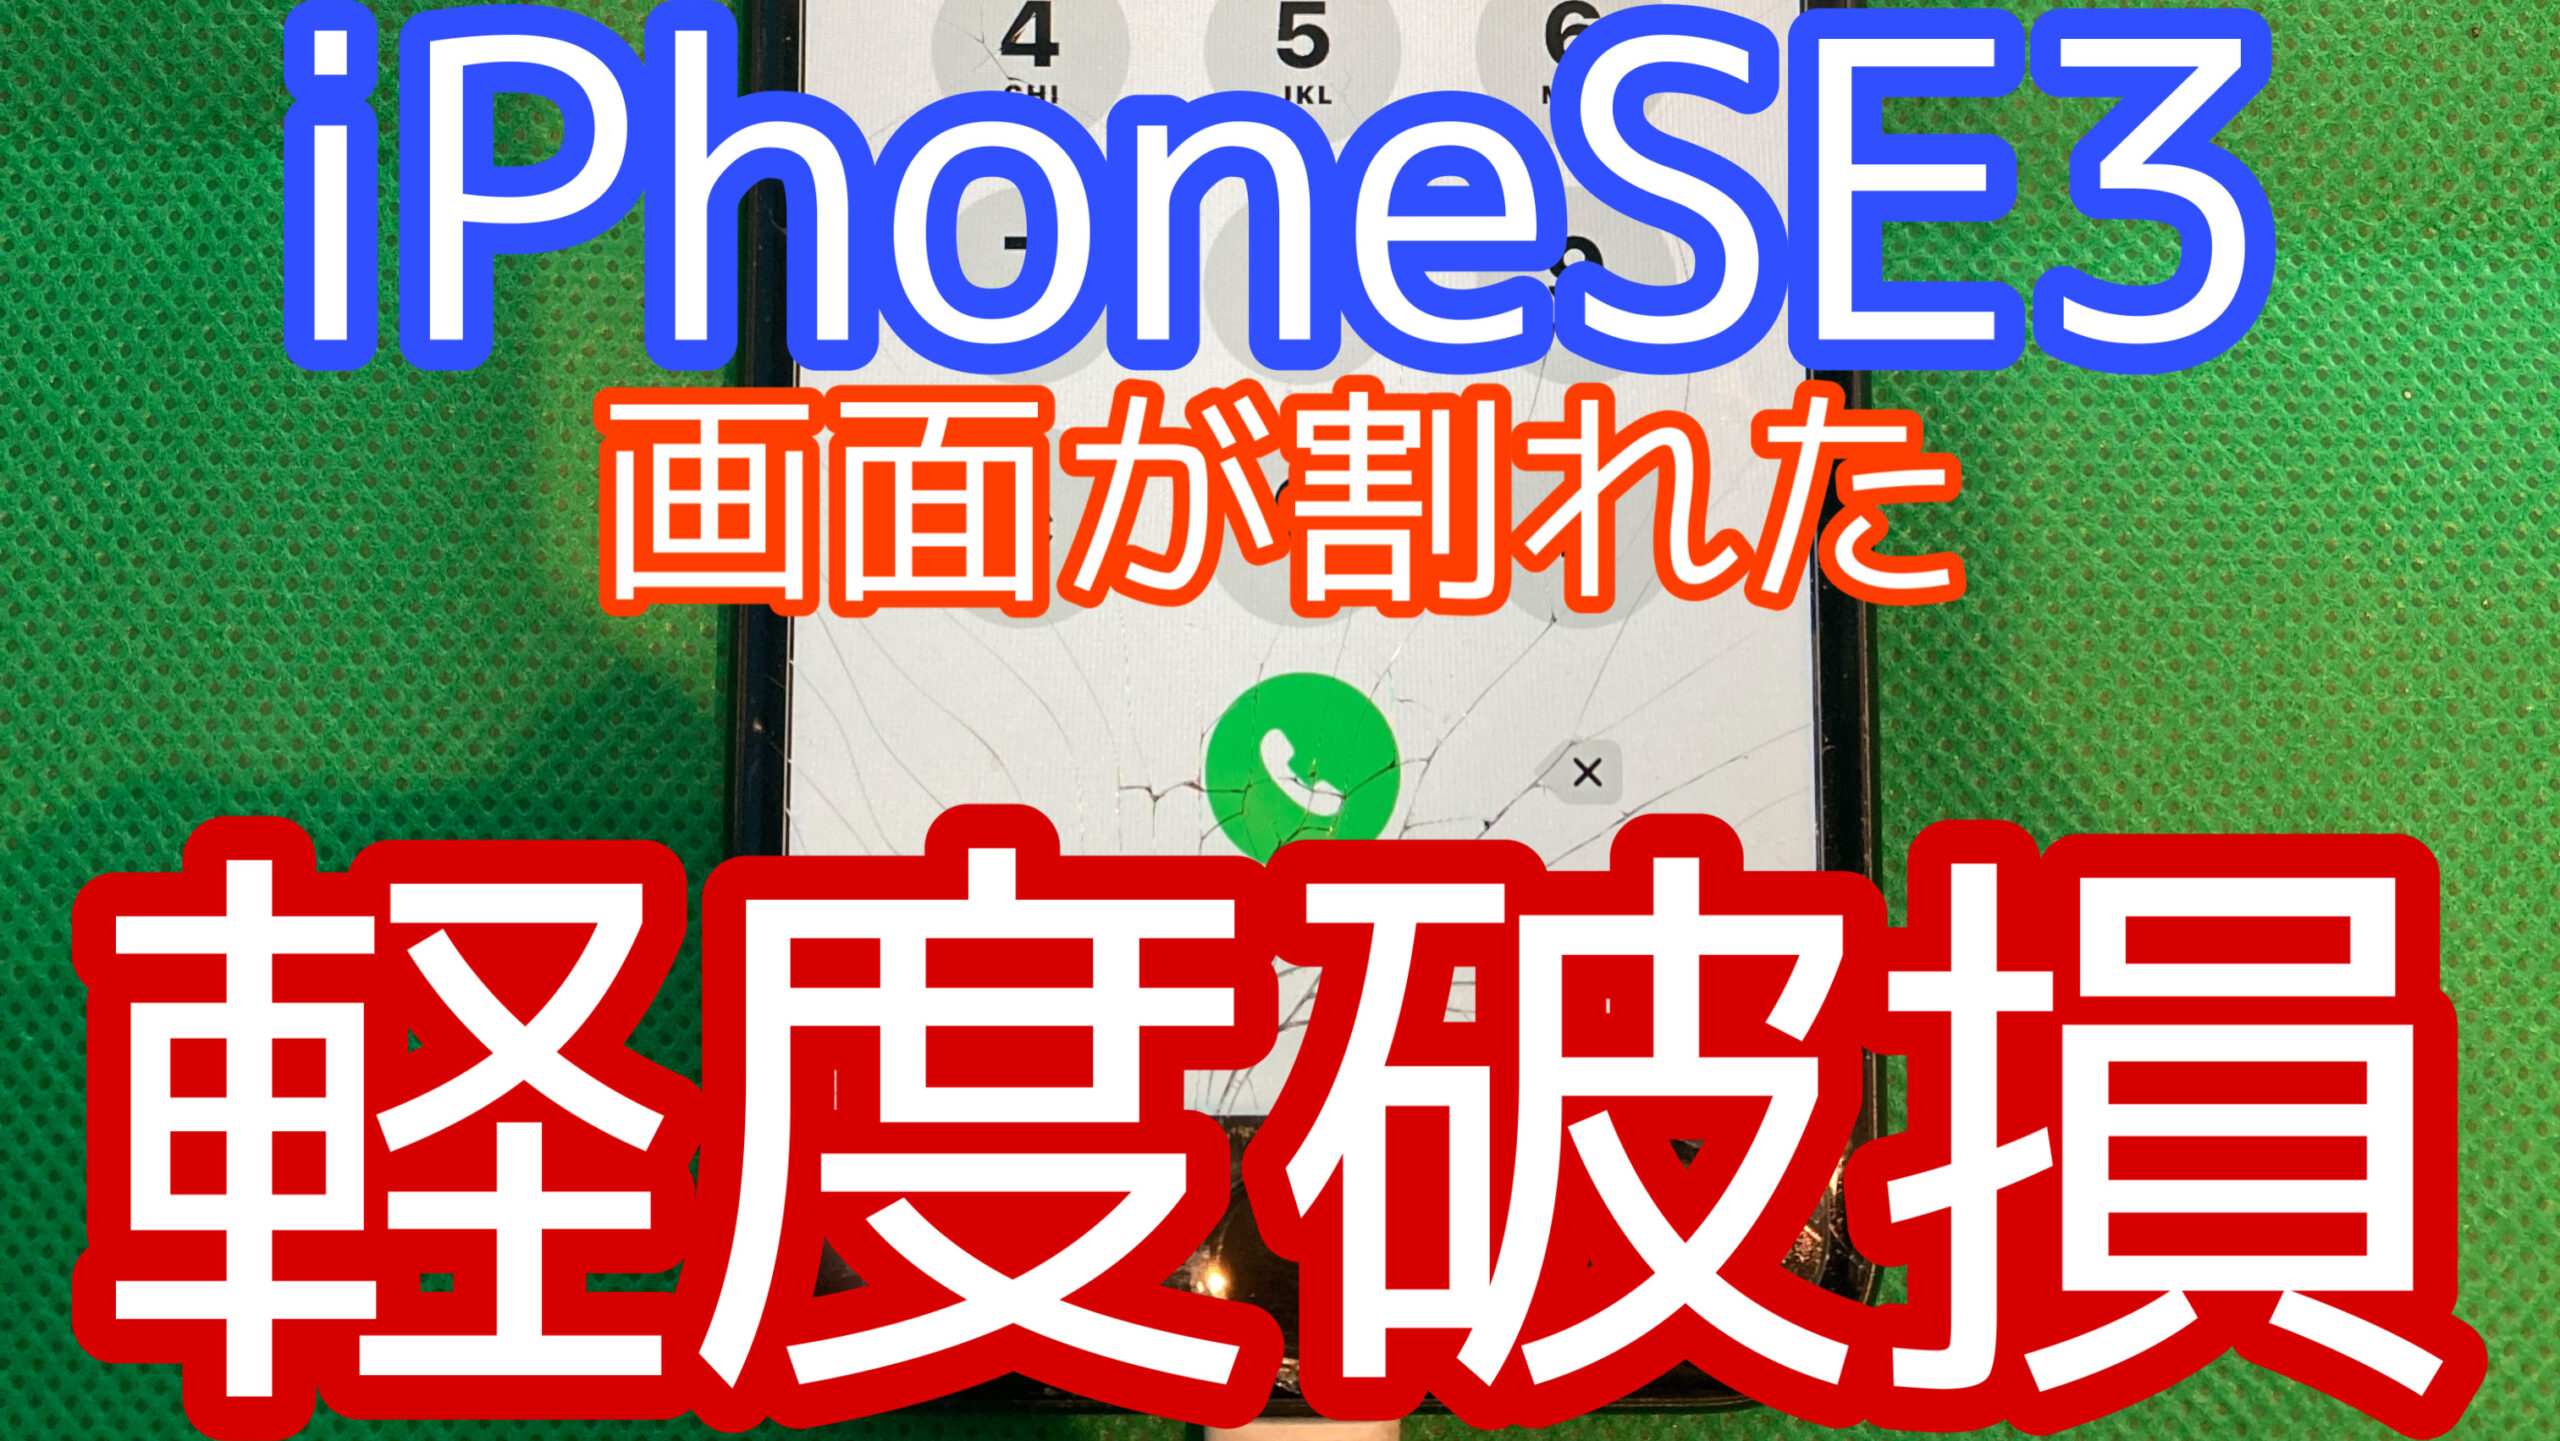 iPhoneSE3アイキャッチ画像